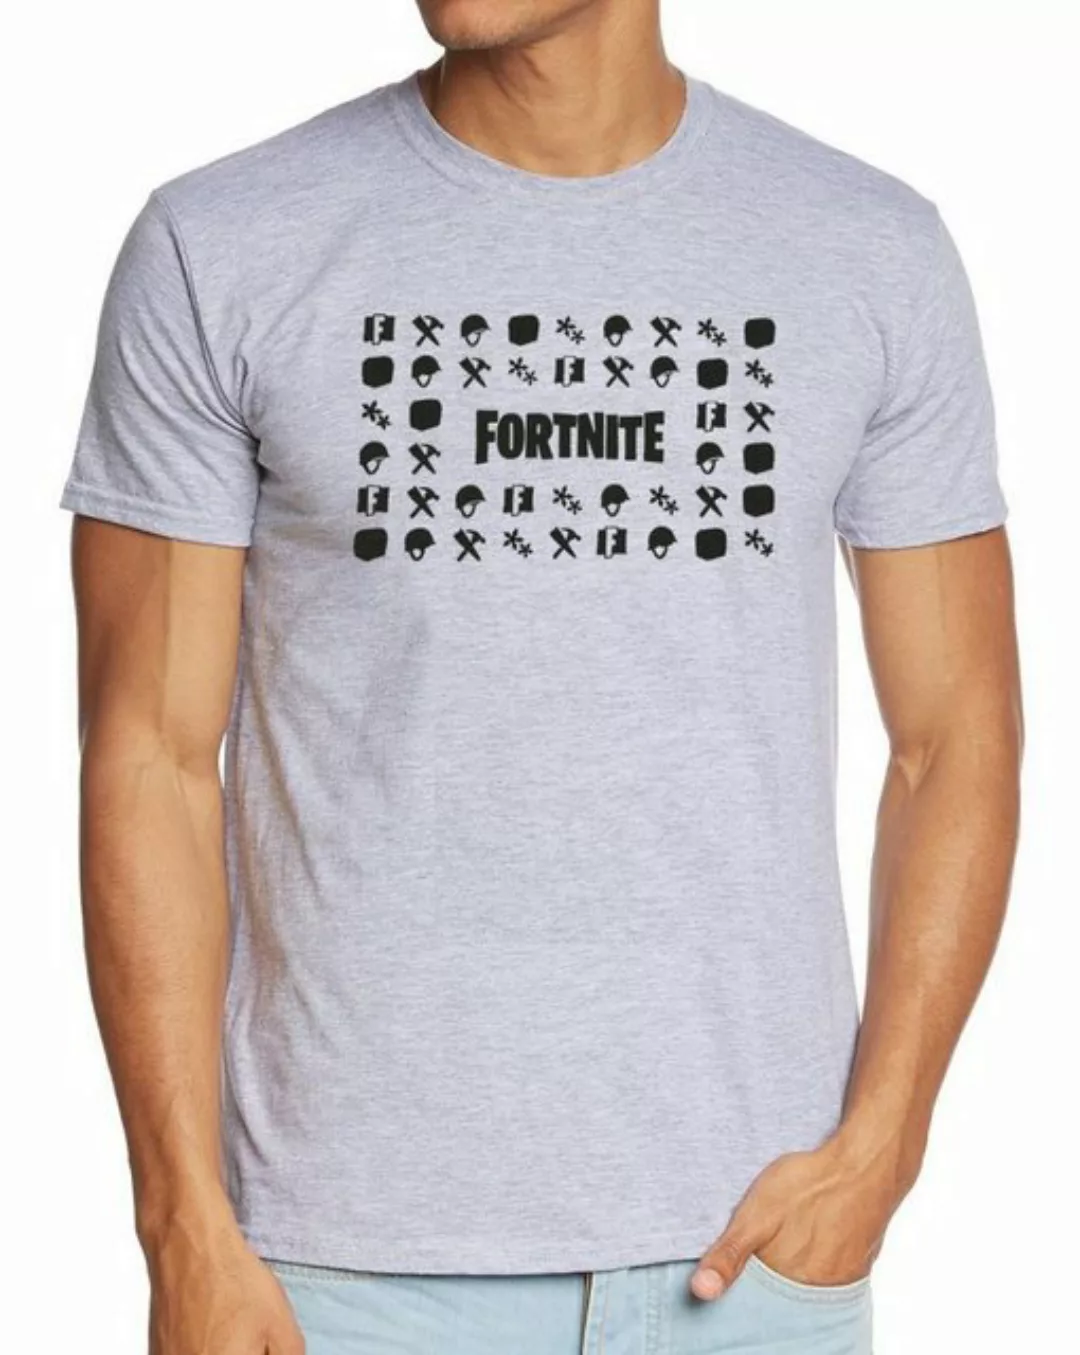 Fortnite Print-Shirt Fortnite T-Shirt hellgrau meliert Erwachsene + Jugendl günstig online kaufen